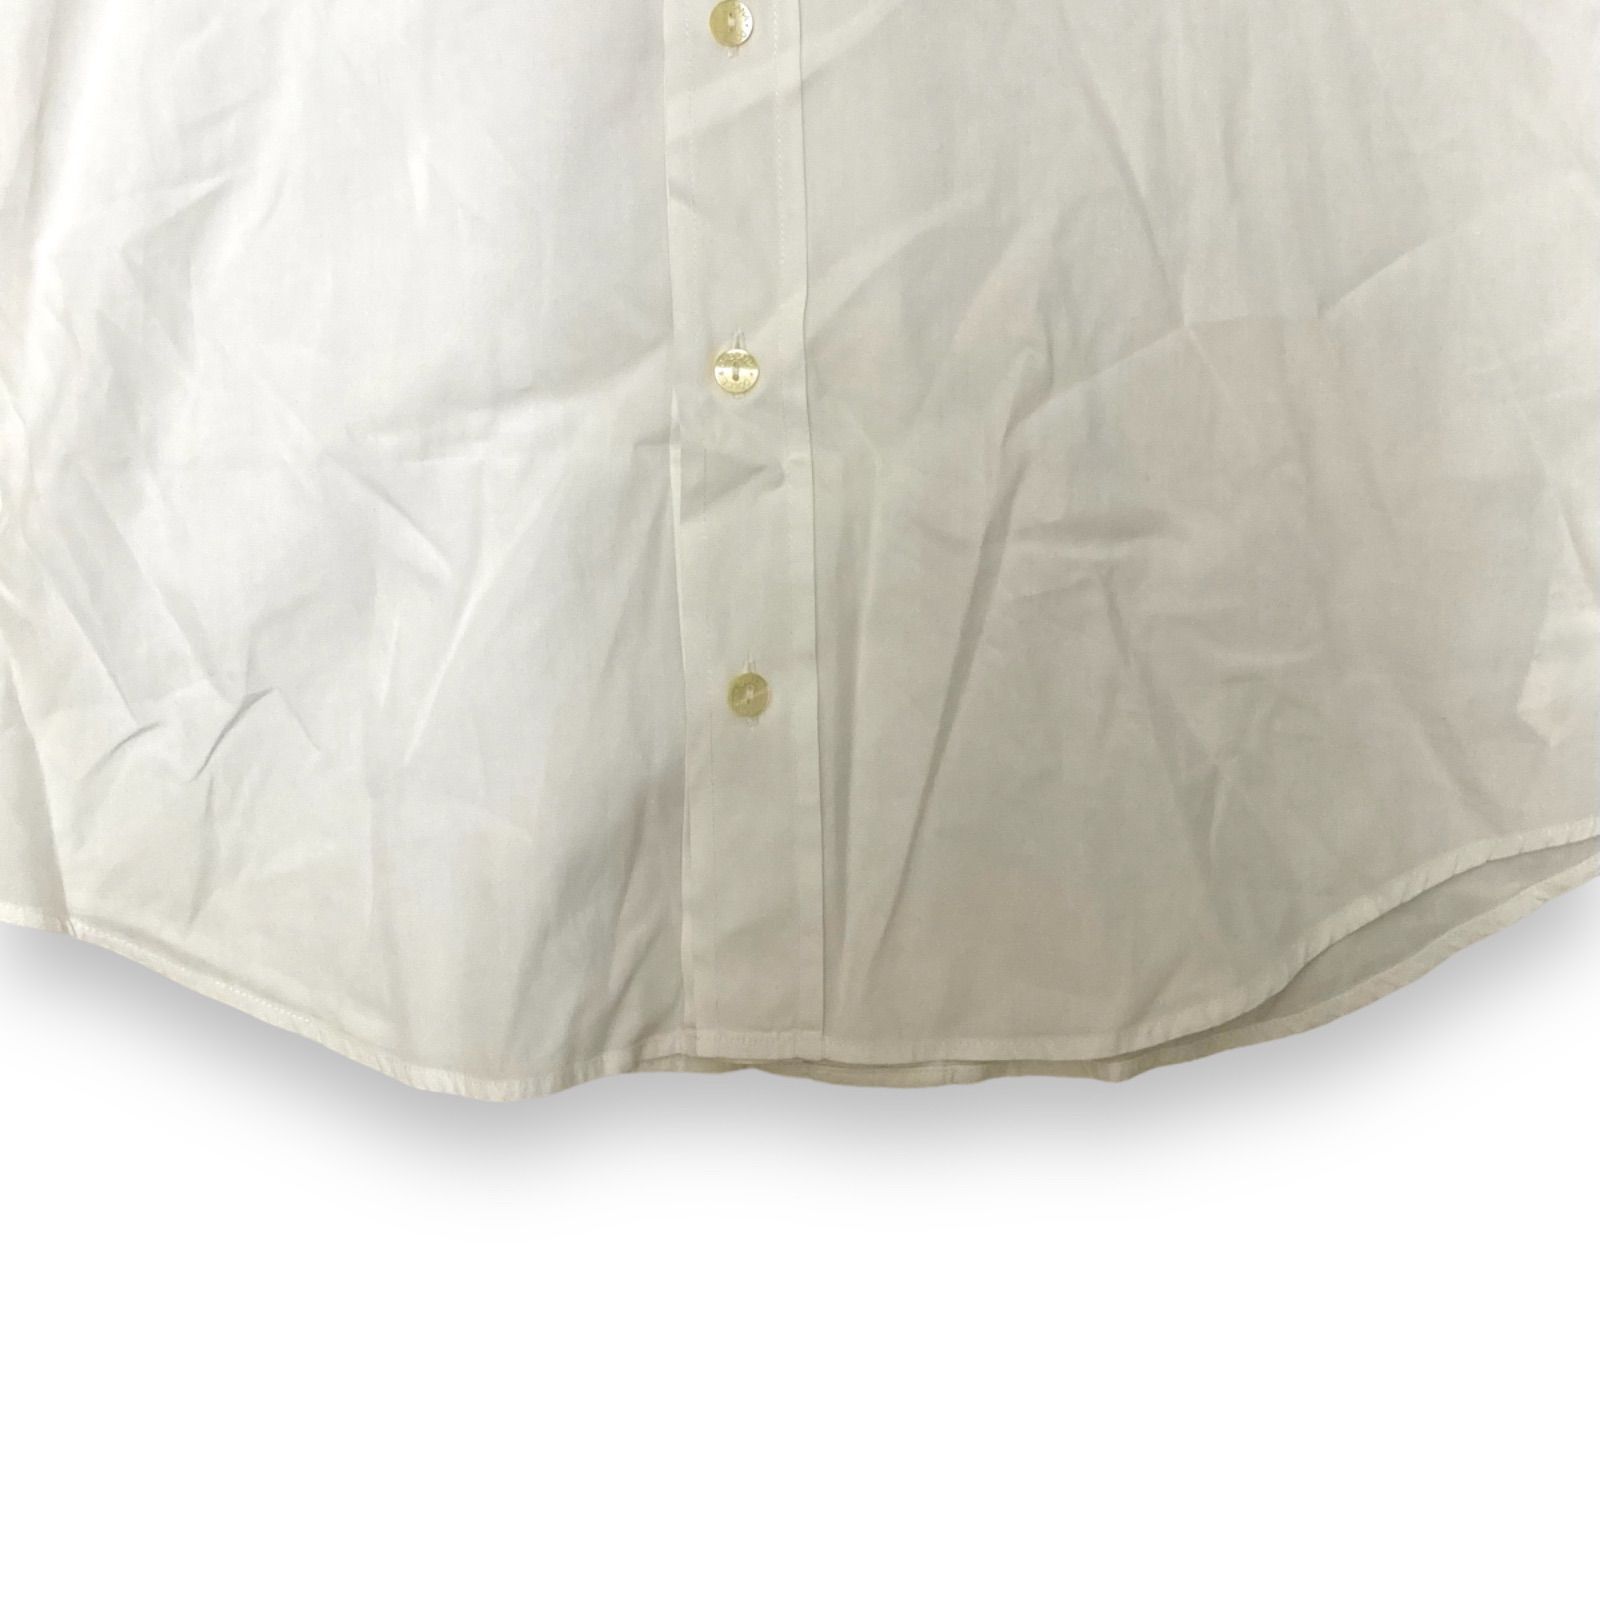 DOLCE&GABBANA ドルチェアンドガッバーナ サイズ【38】 ホワイト 白 コットン100% 長袖シャツ カッターシャツ メンズ  G5307T/FU5DW